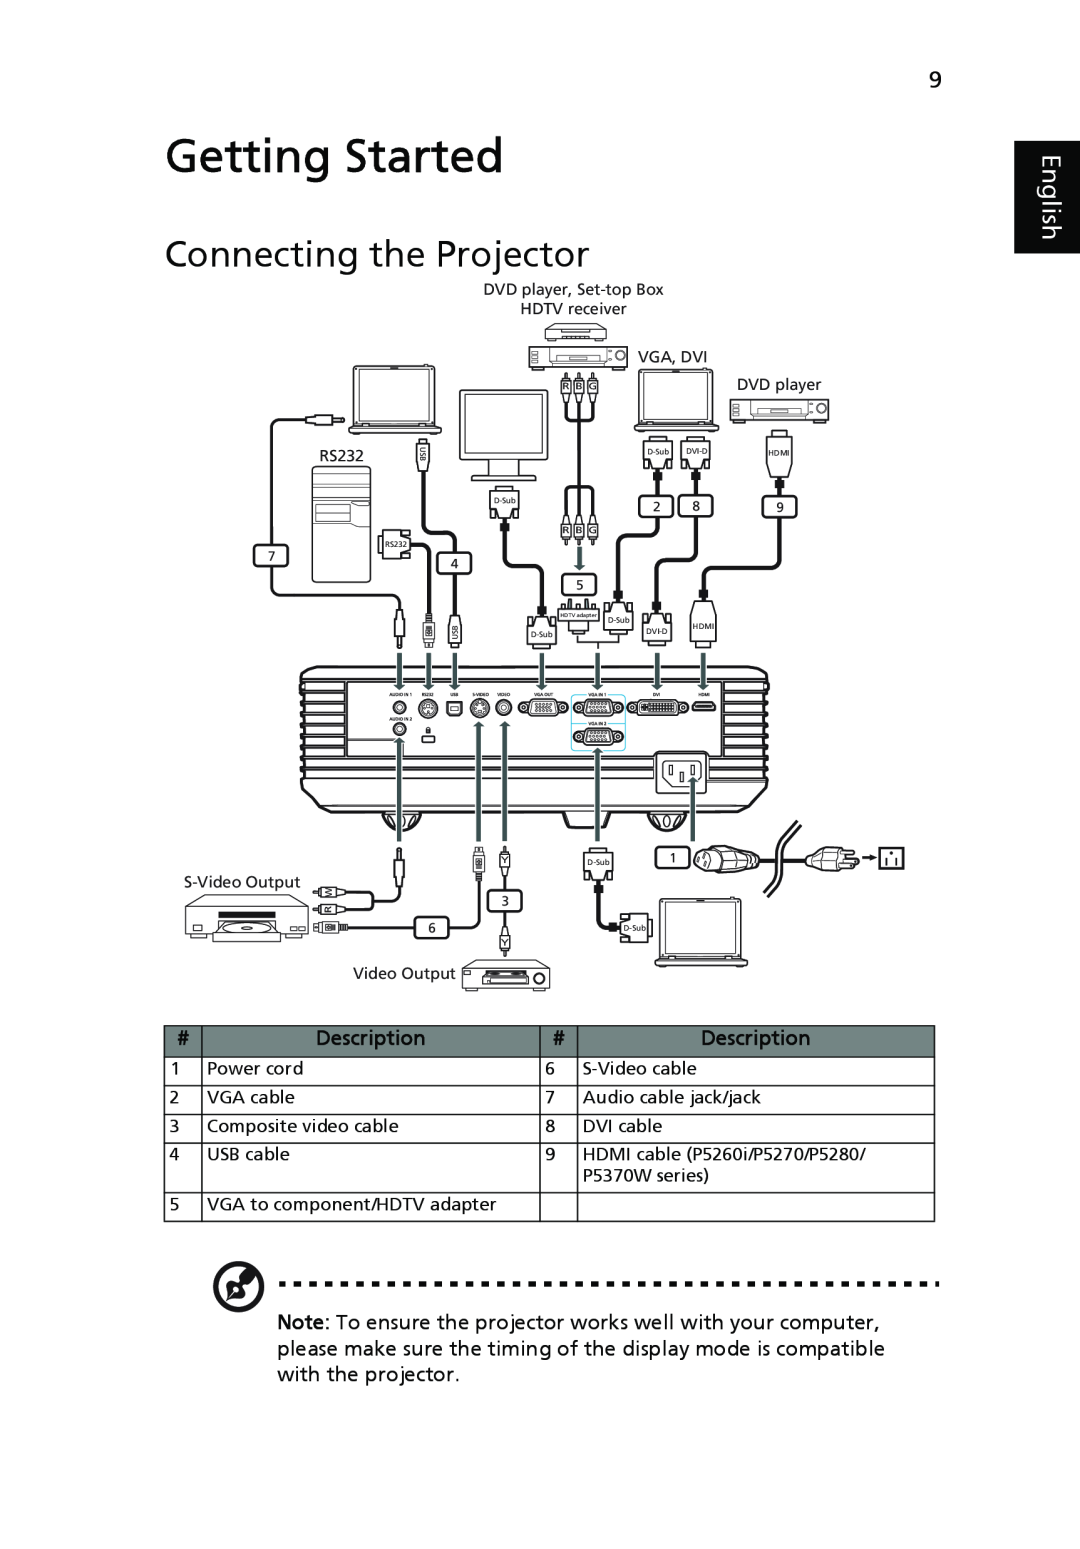 Acer P1165P, P1265P, P5370W, P5270, P5260i manual Getting Started, Connecting the Projector, English, Description 